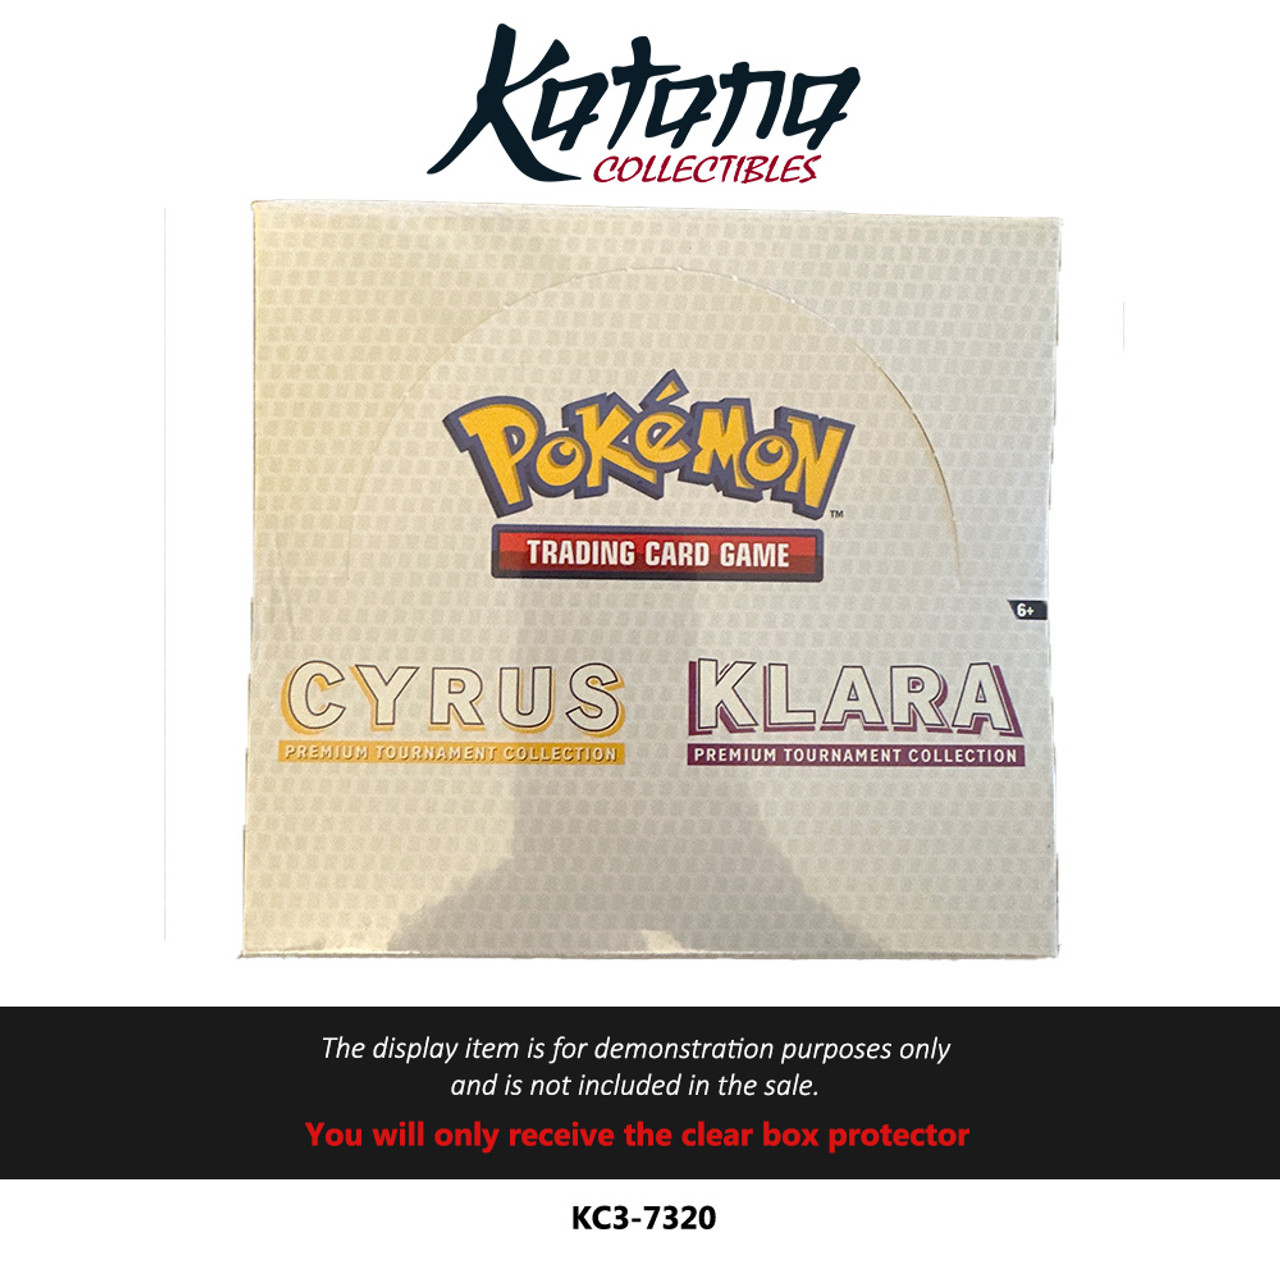 Katana Collectibles Protector For Pokémon Cyrus & Klara Premium Tournament Collection Display Box